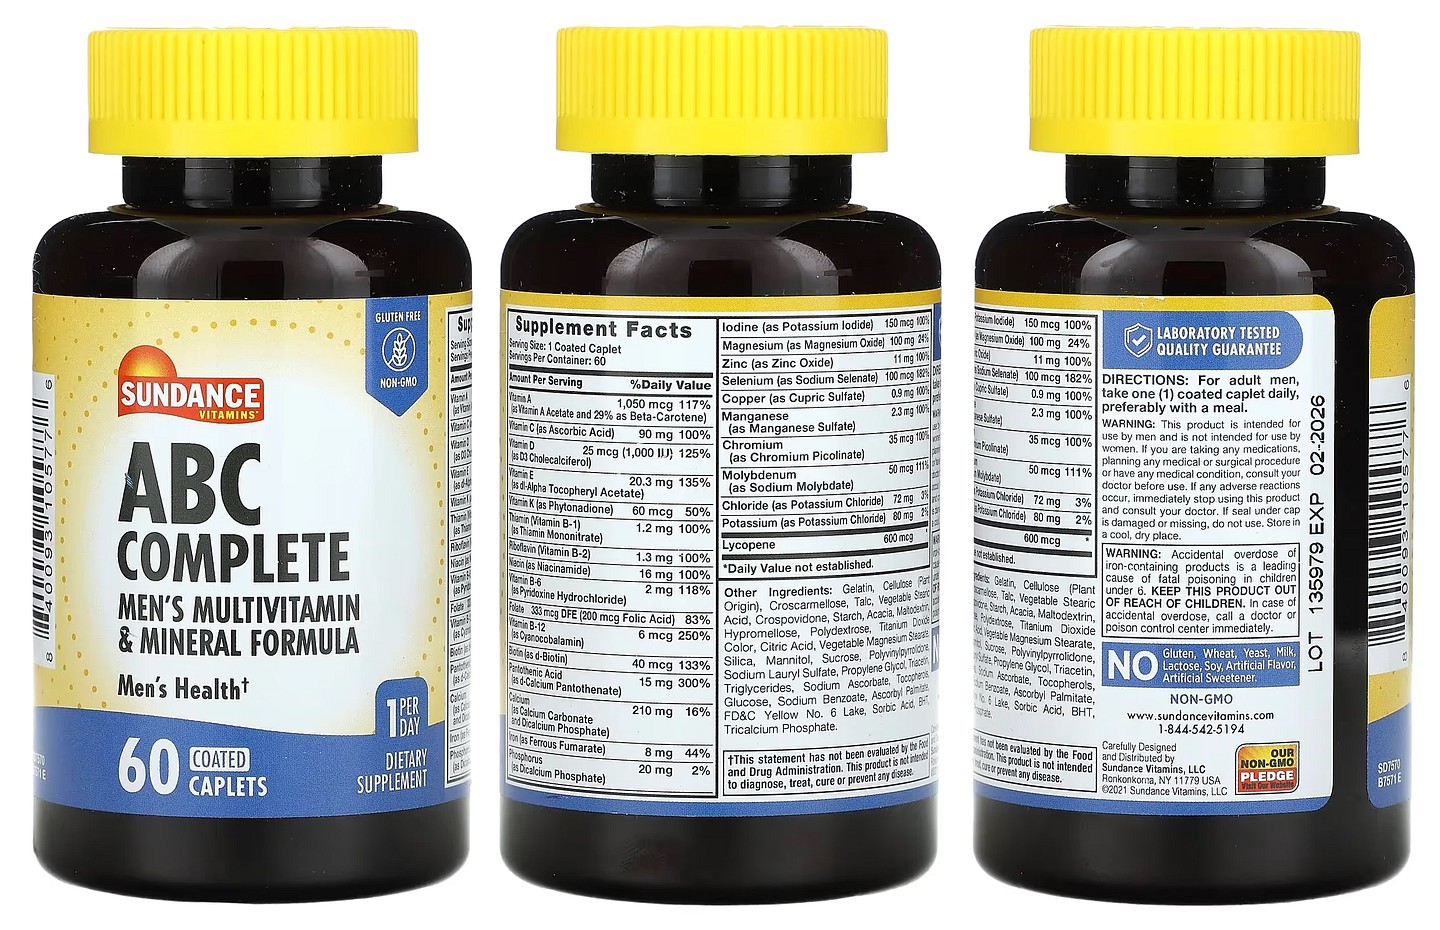 Sundance Vitamins, ABC Complete Men's Multivitamin & Mineral Formula packaging